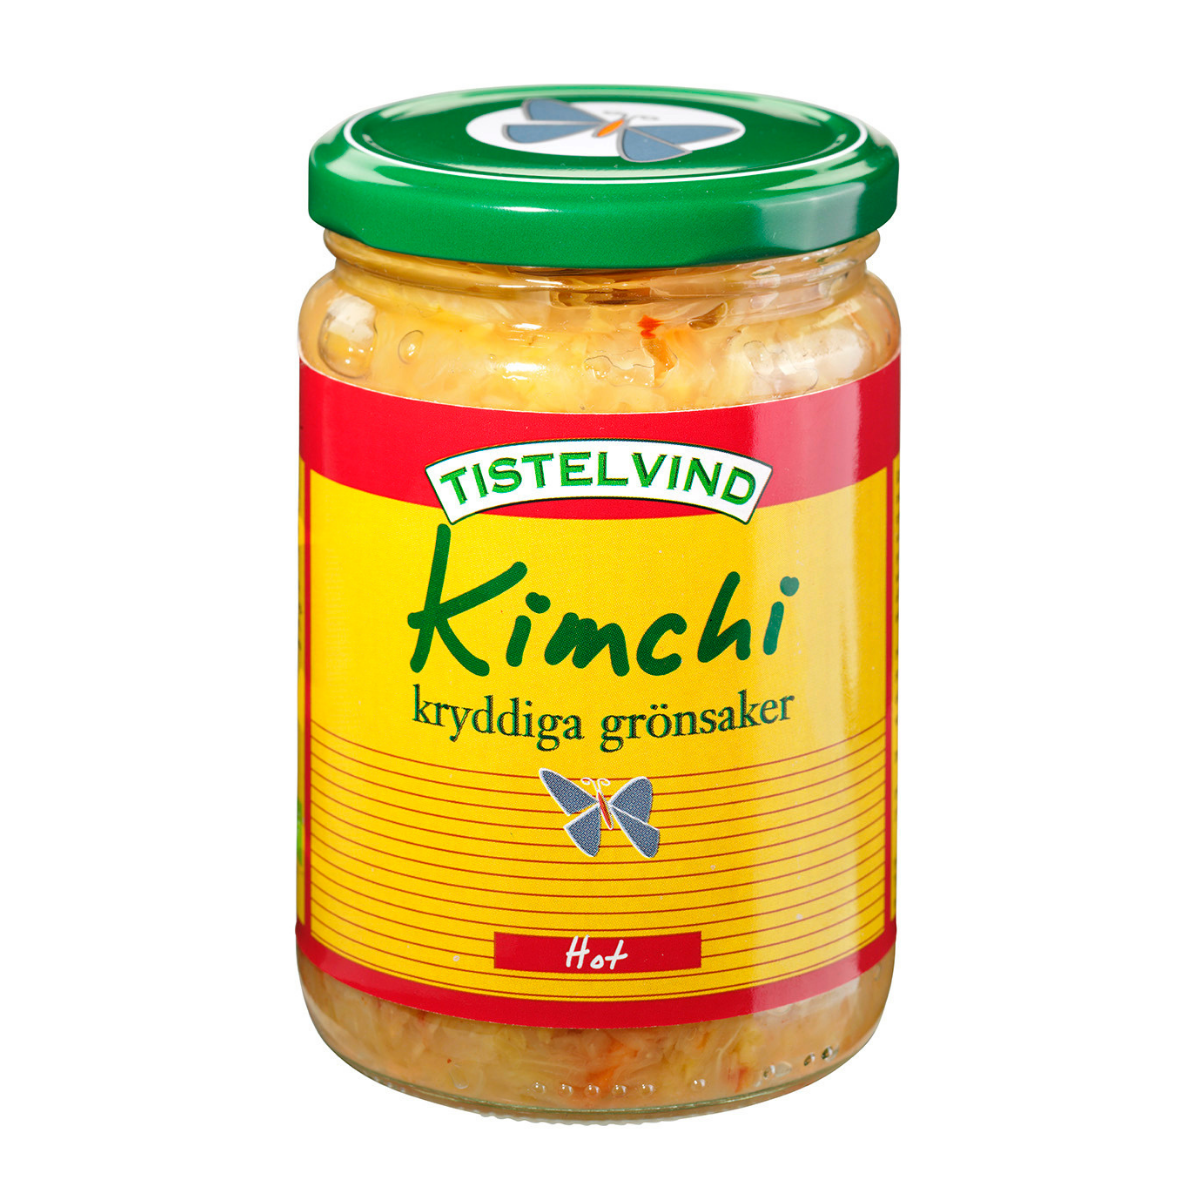 Tistelvind's Kimchi hot'